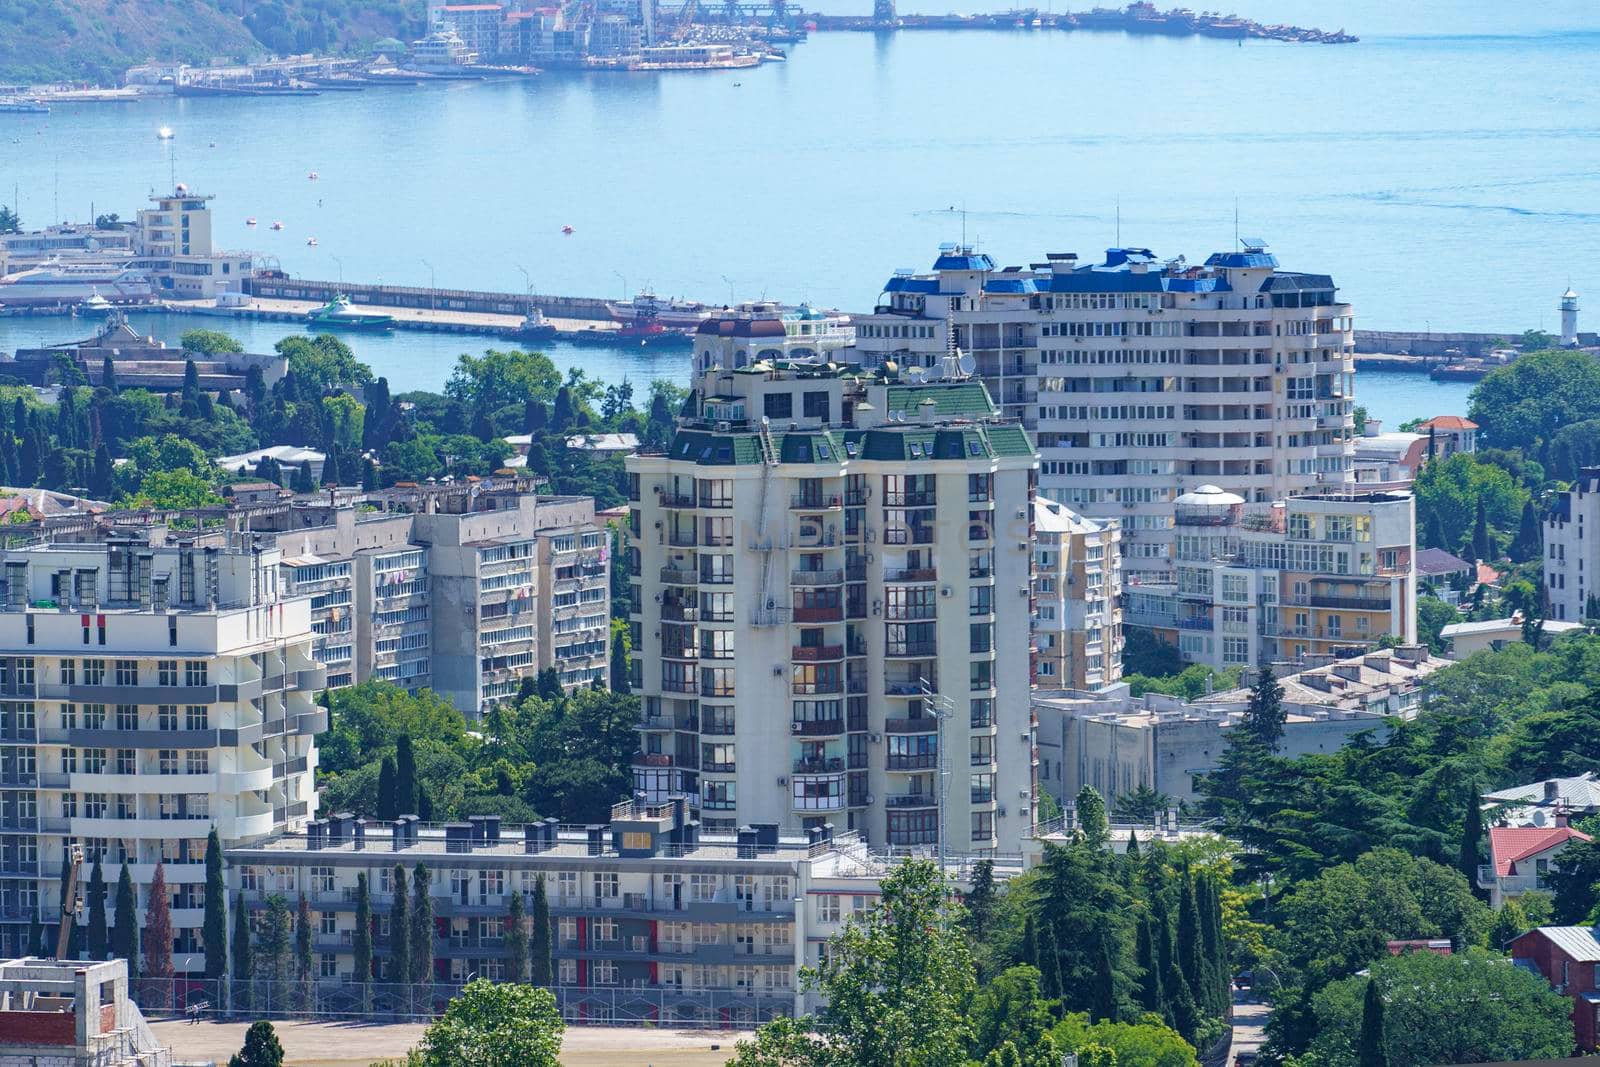 City landscape with a view of Yalta, Crimea by Vvicca